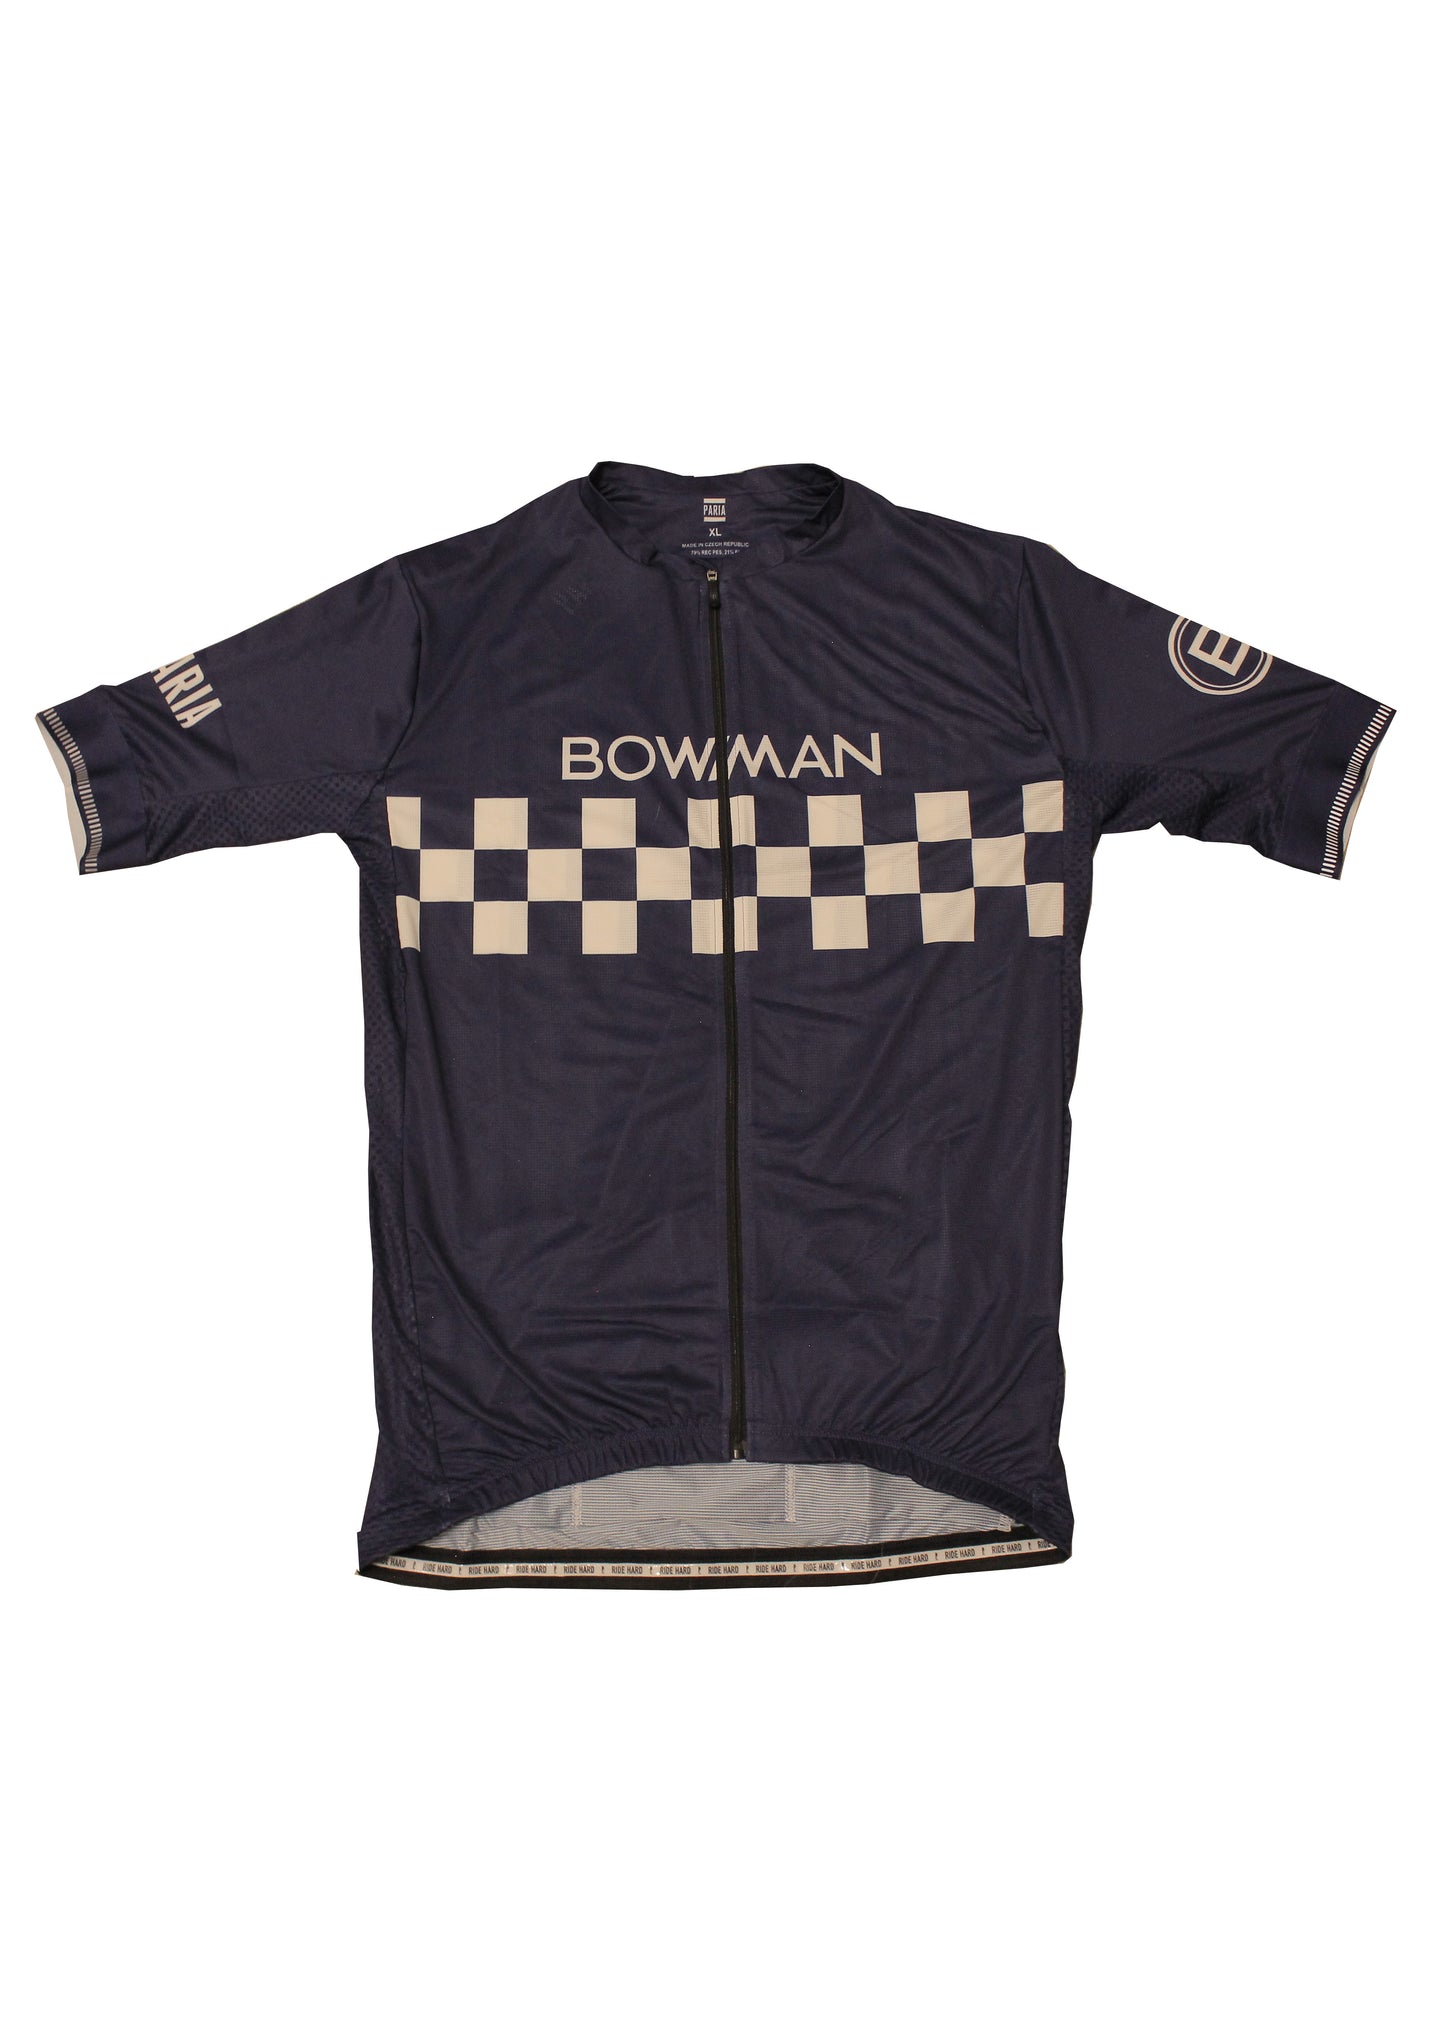 Bowman Short Sleeve Men’s Cycling Jersey.